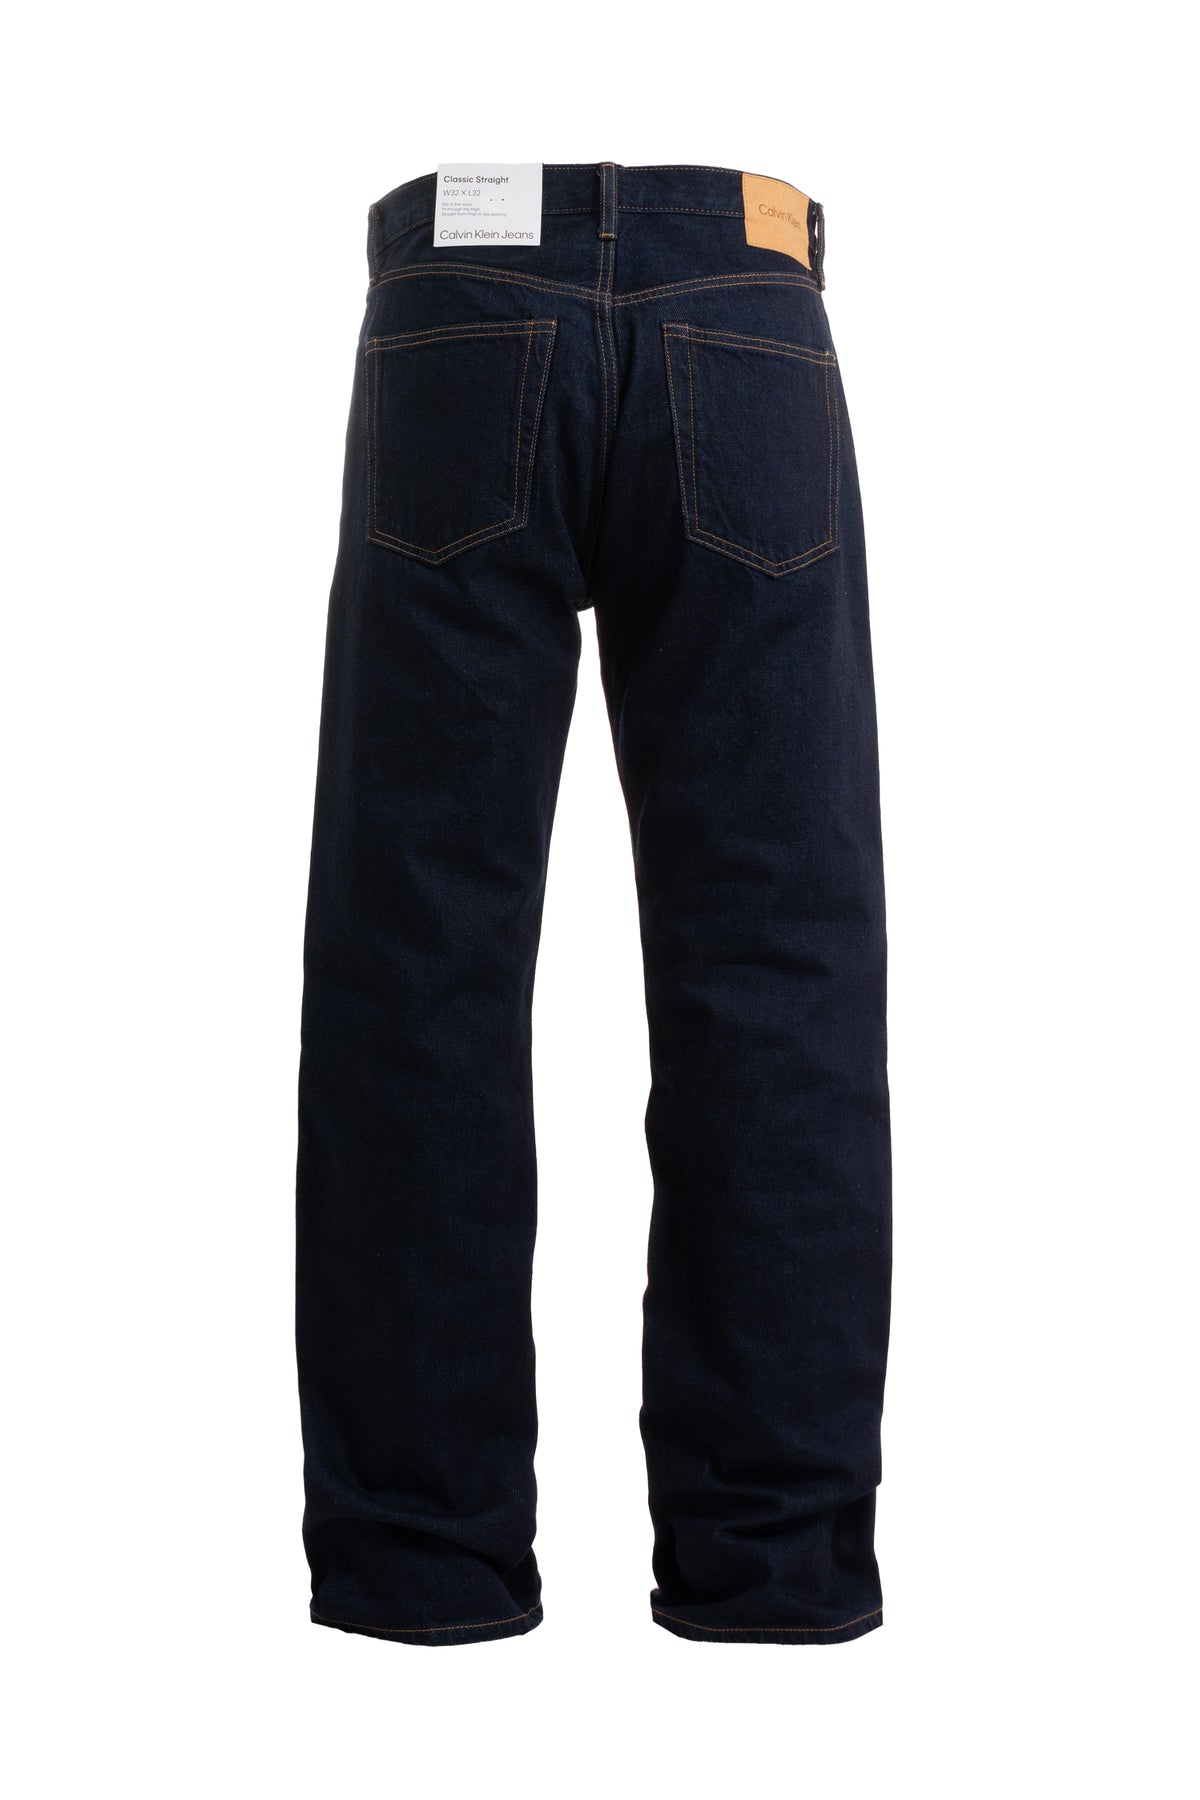 Calvin Klein Jeans (カルバンクラインジーンズ) | NUBIAN TOKYO 通販